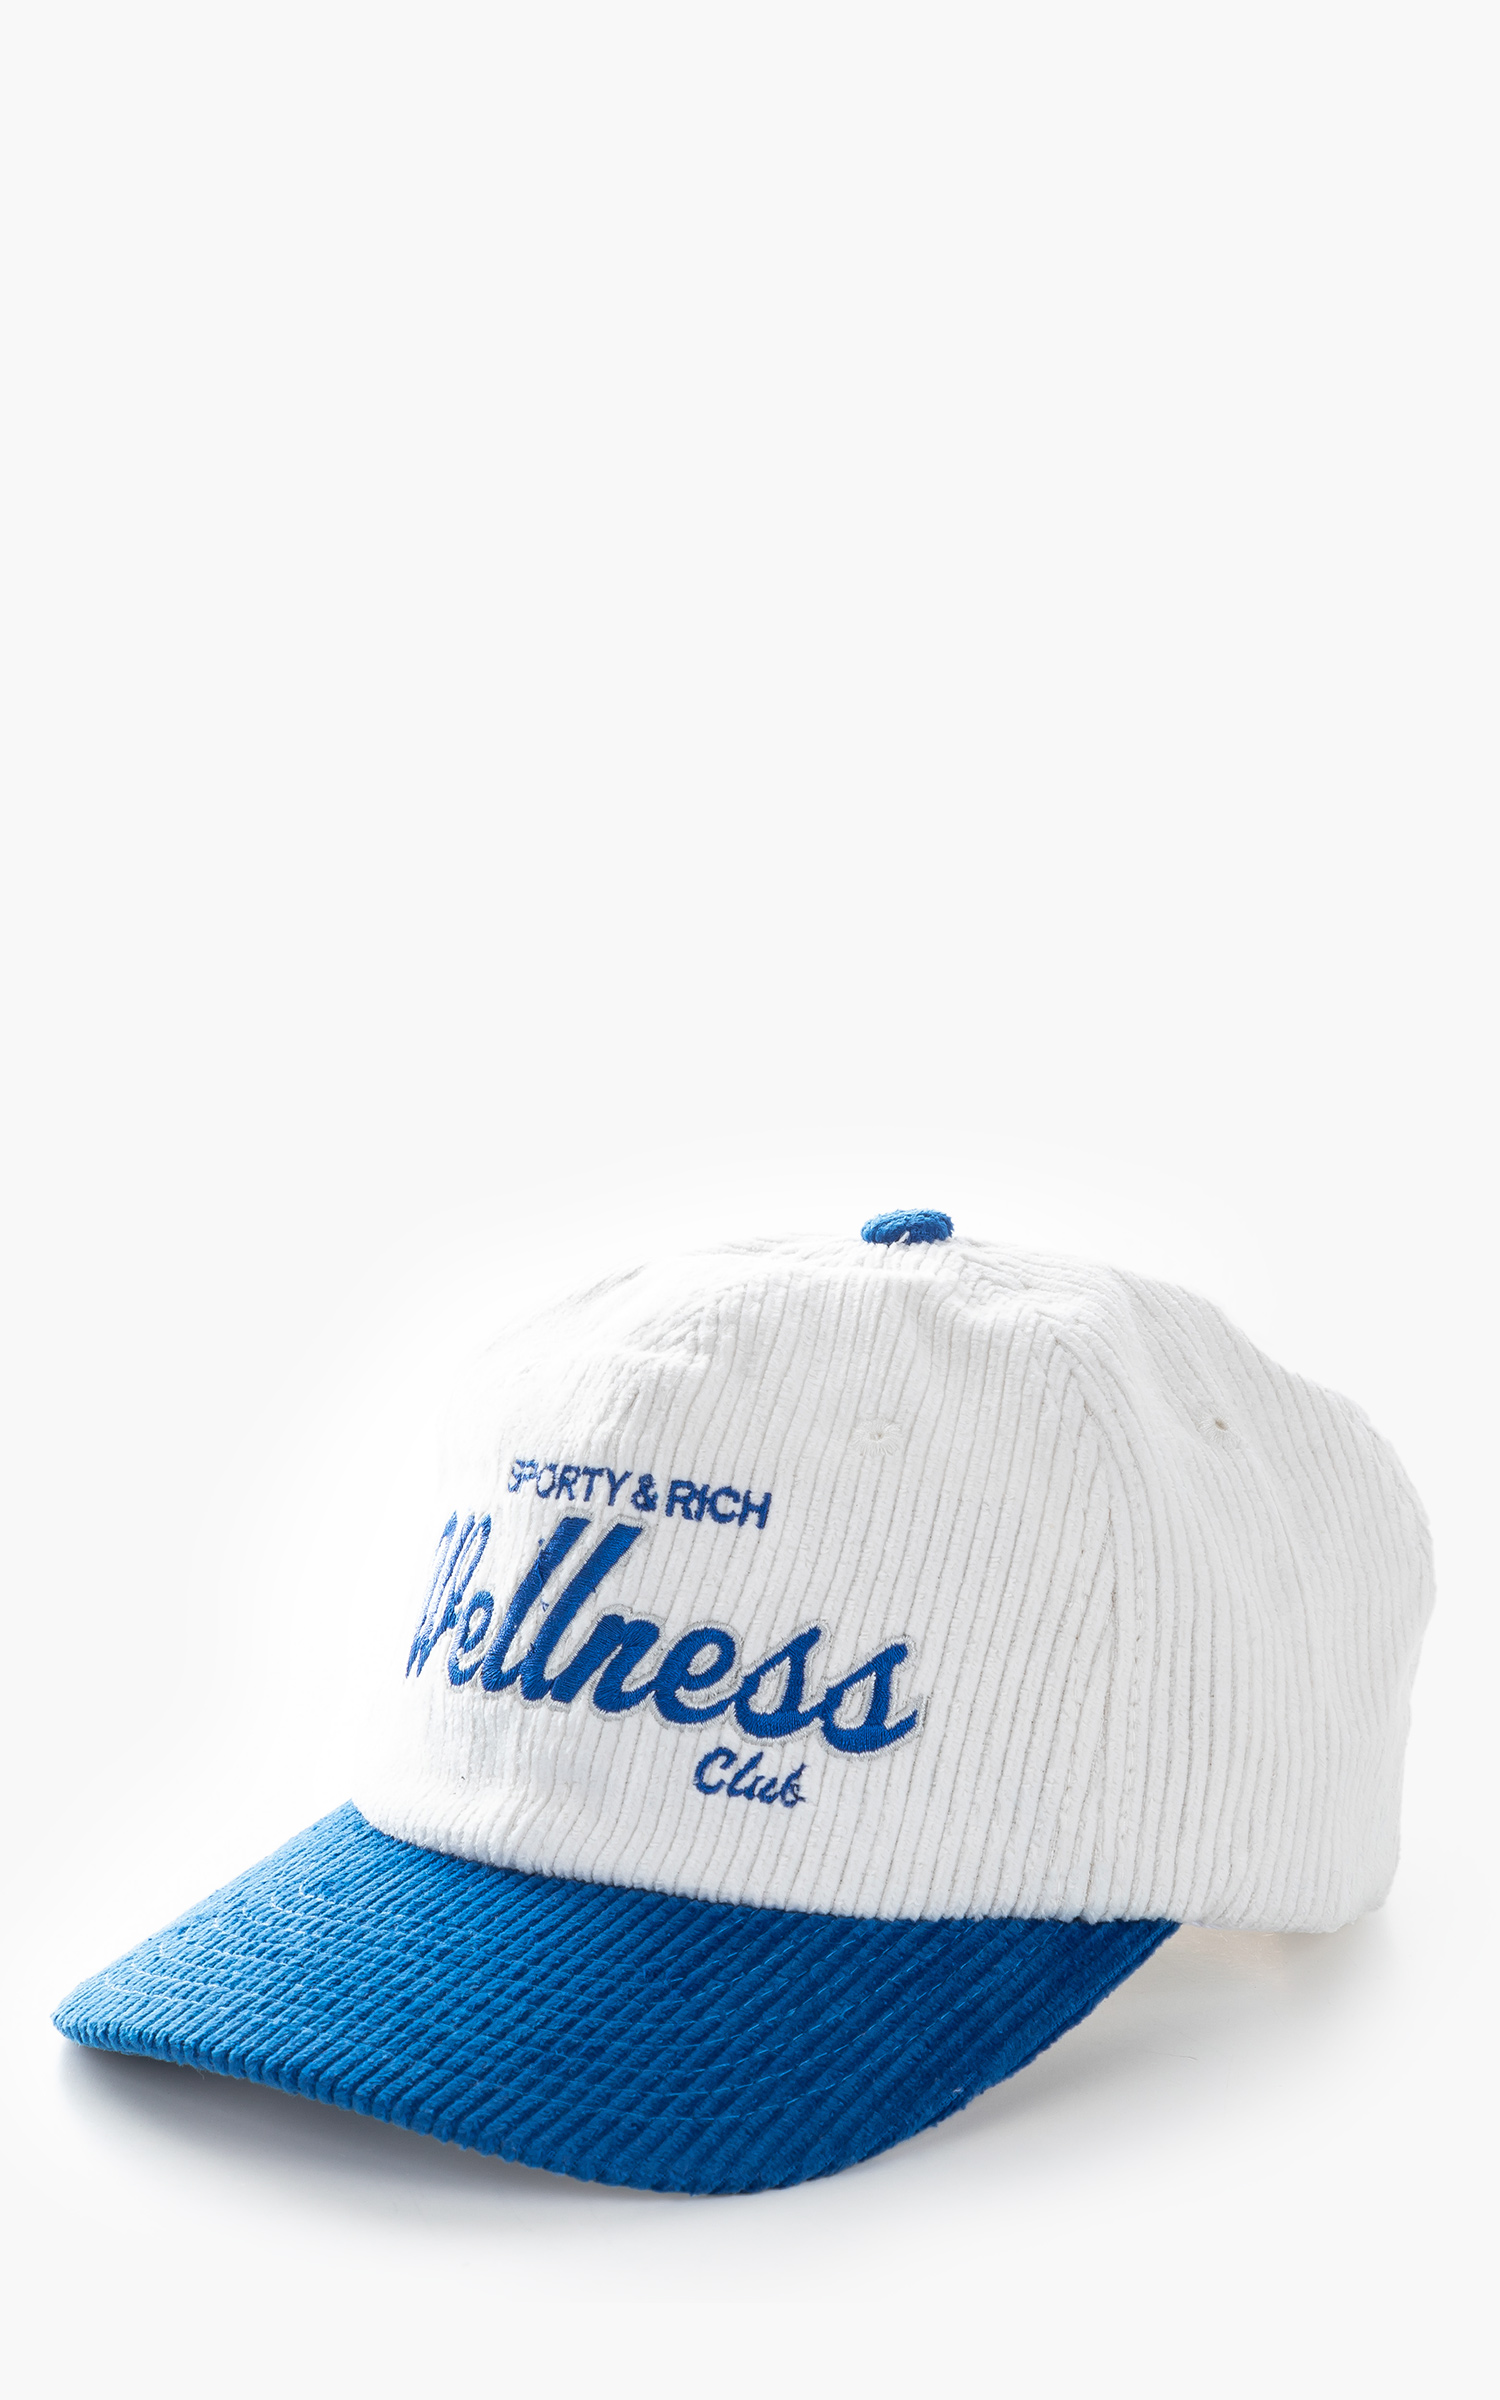 Sporty & Rich Wellness Club Hat White